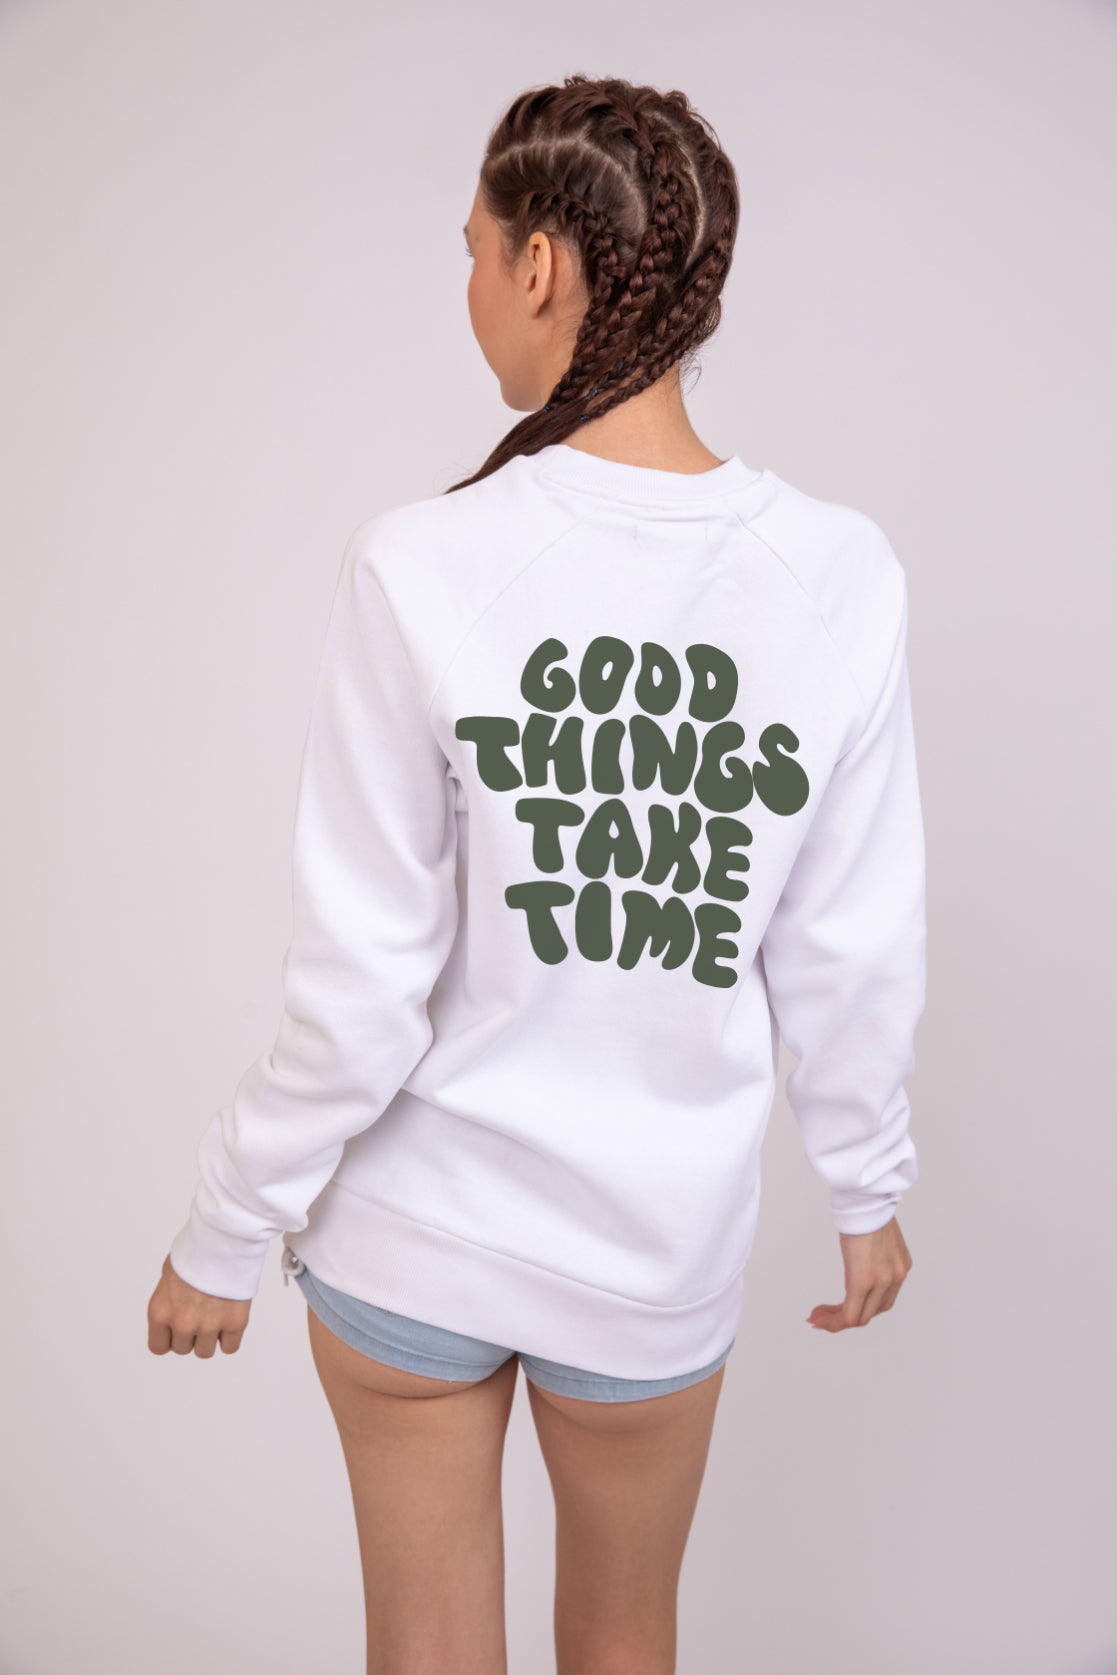 Good things takes time Radiant White - Printed Sweatshirt